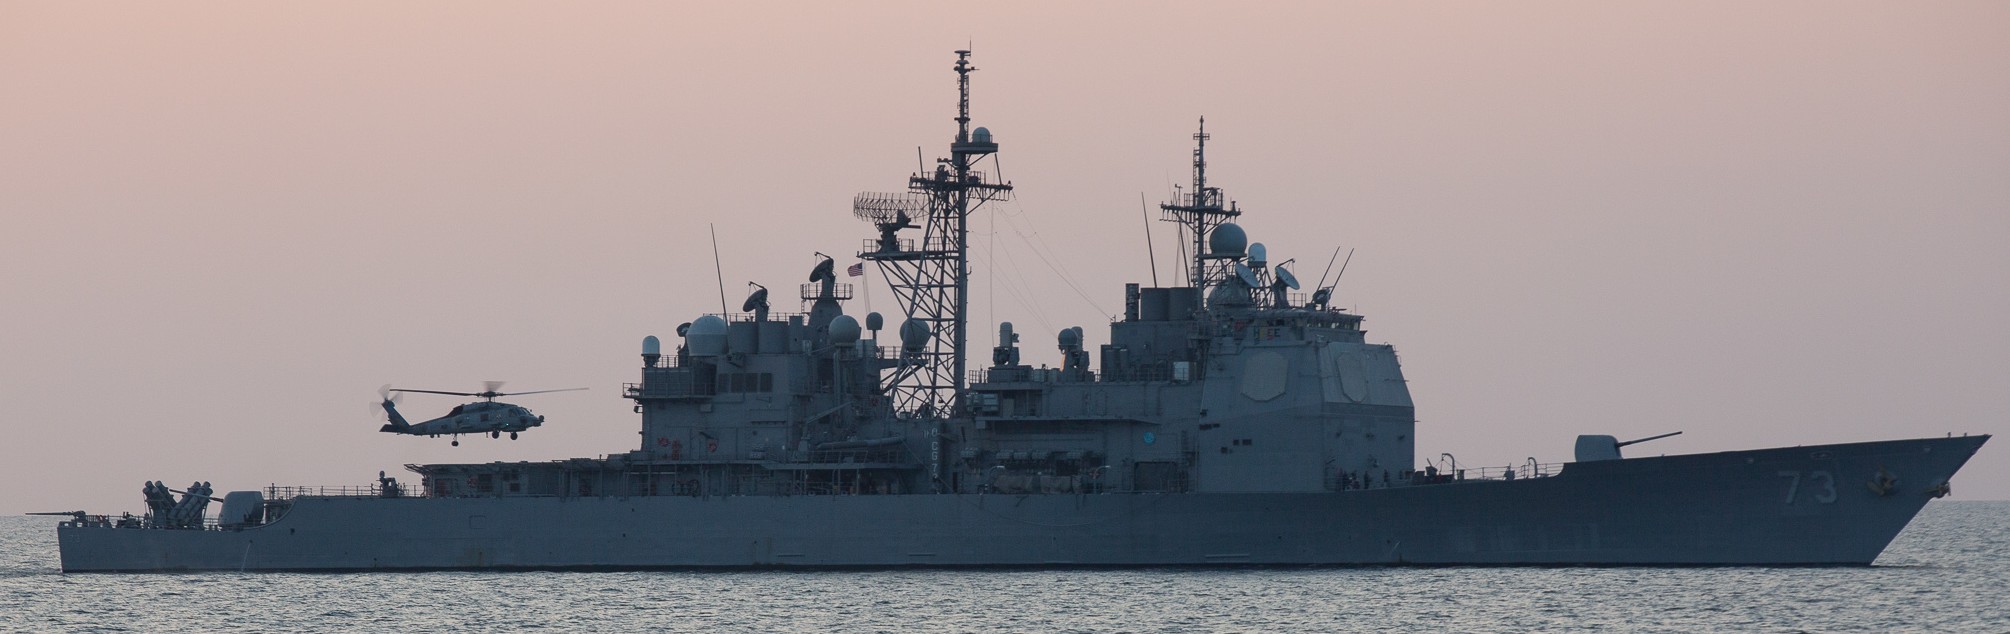 cg-73 uss port royal ticonderoga class guided missile cruiser navy sea of oman 61